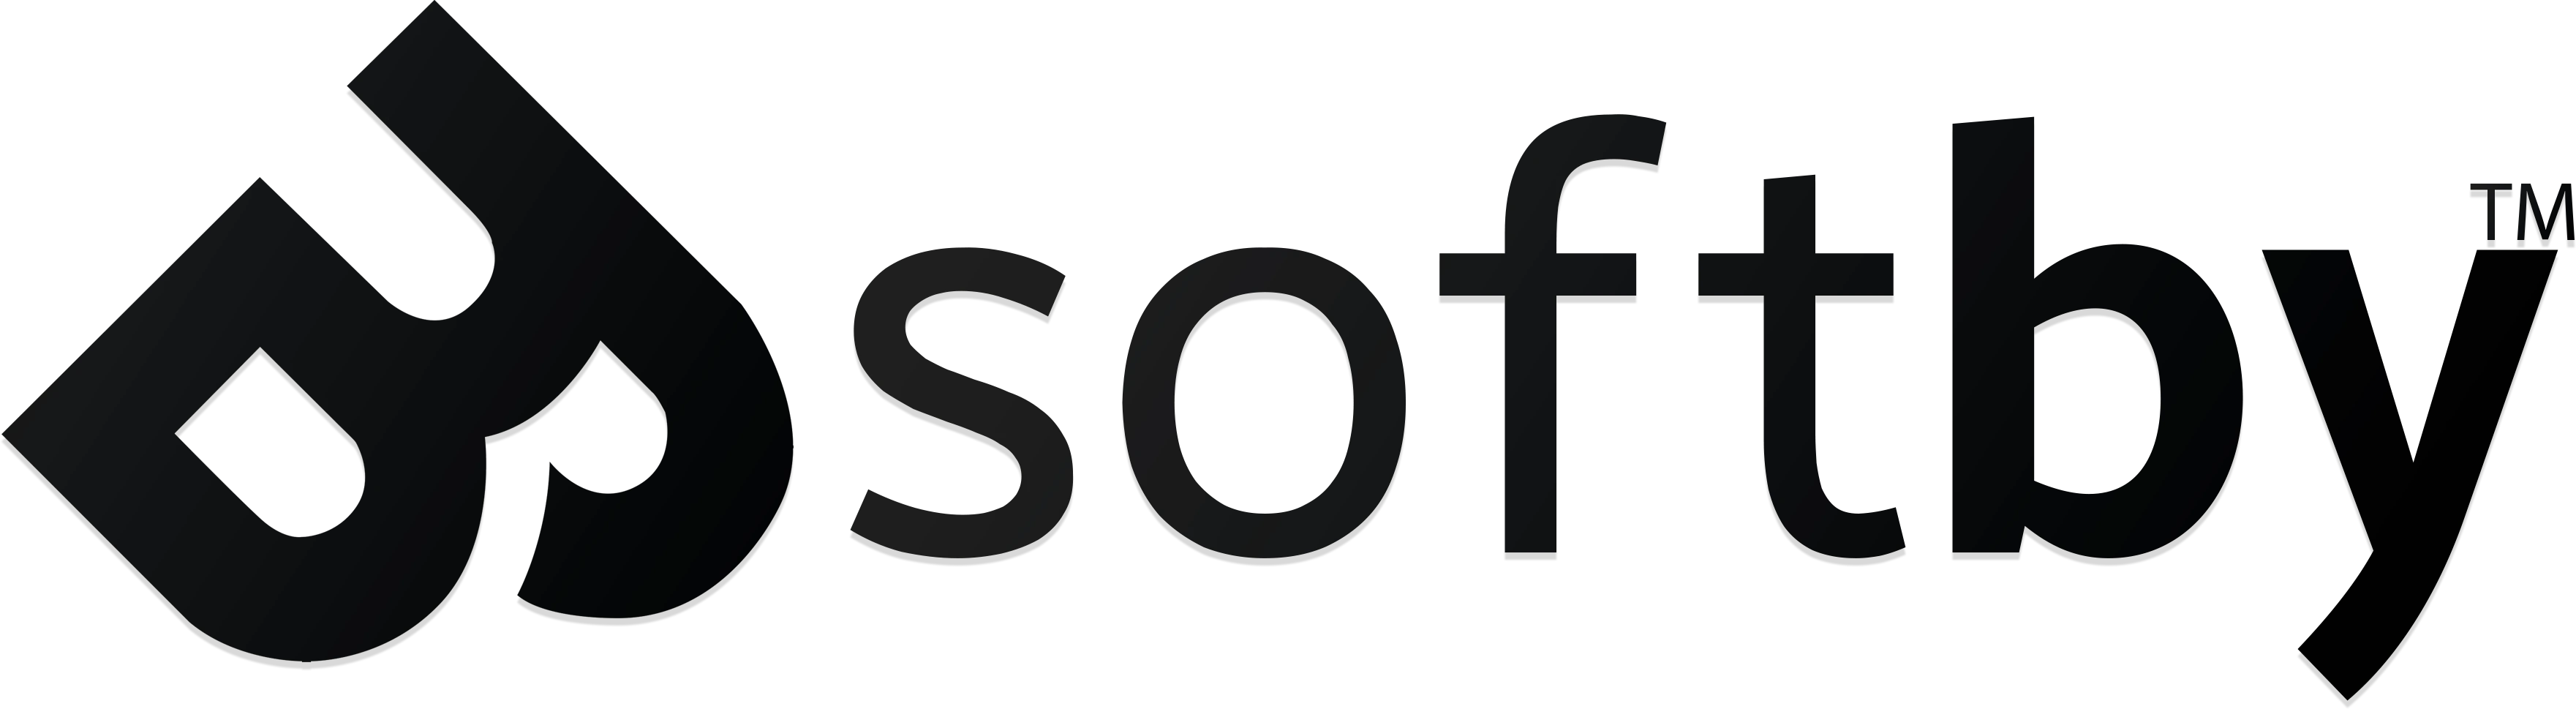 Softby logo